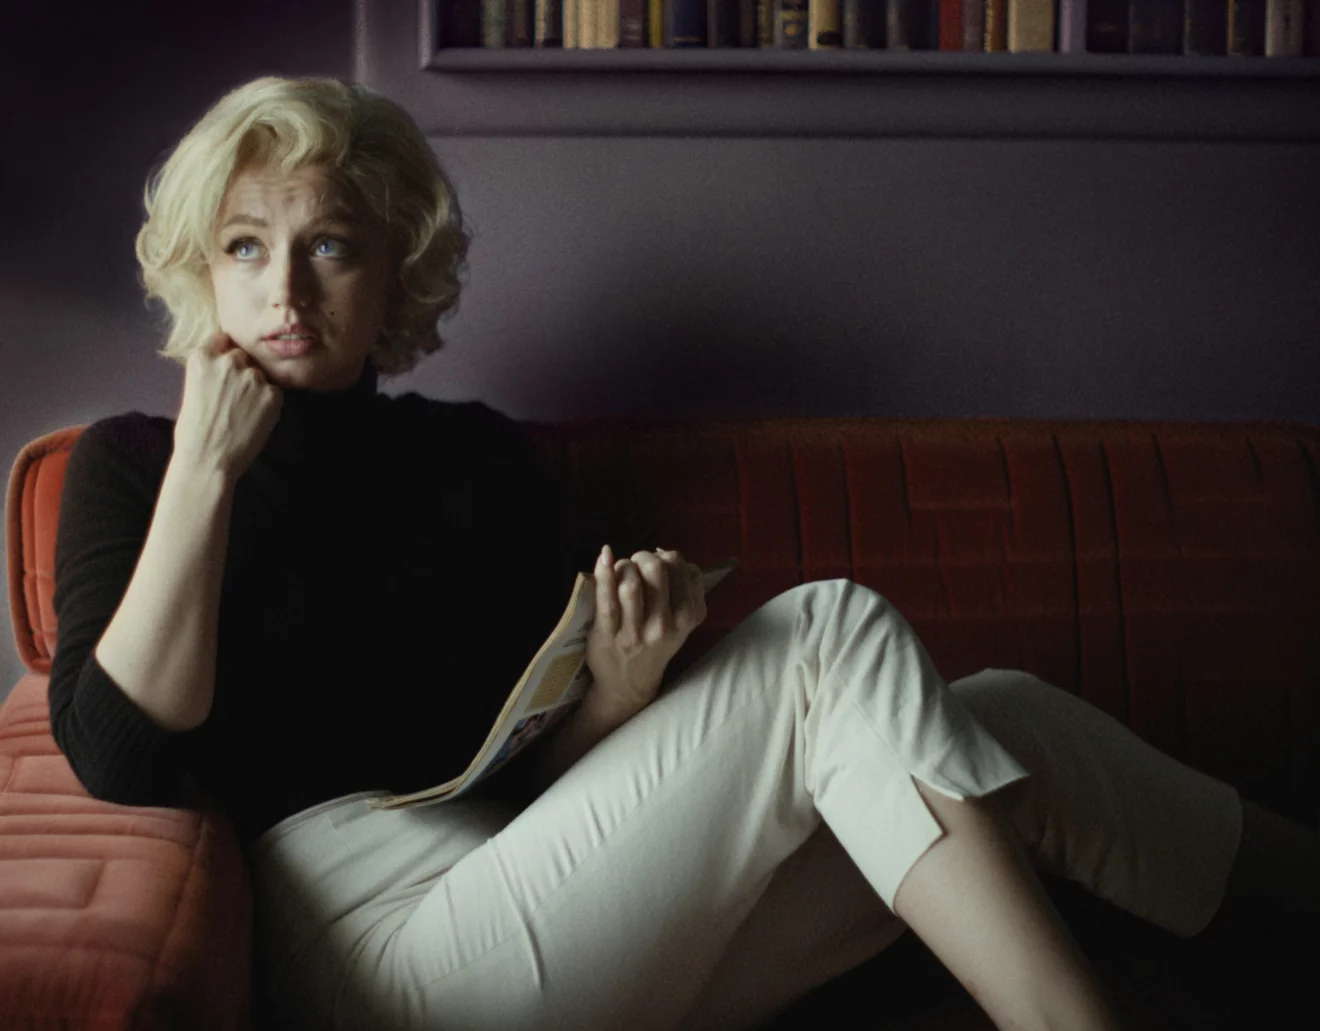 I september får vi se Ana de Armas som Marilyn Monroe i Blonde.